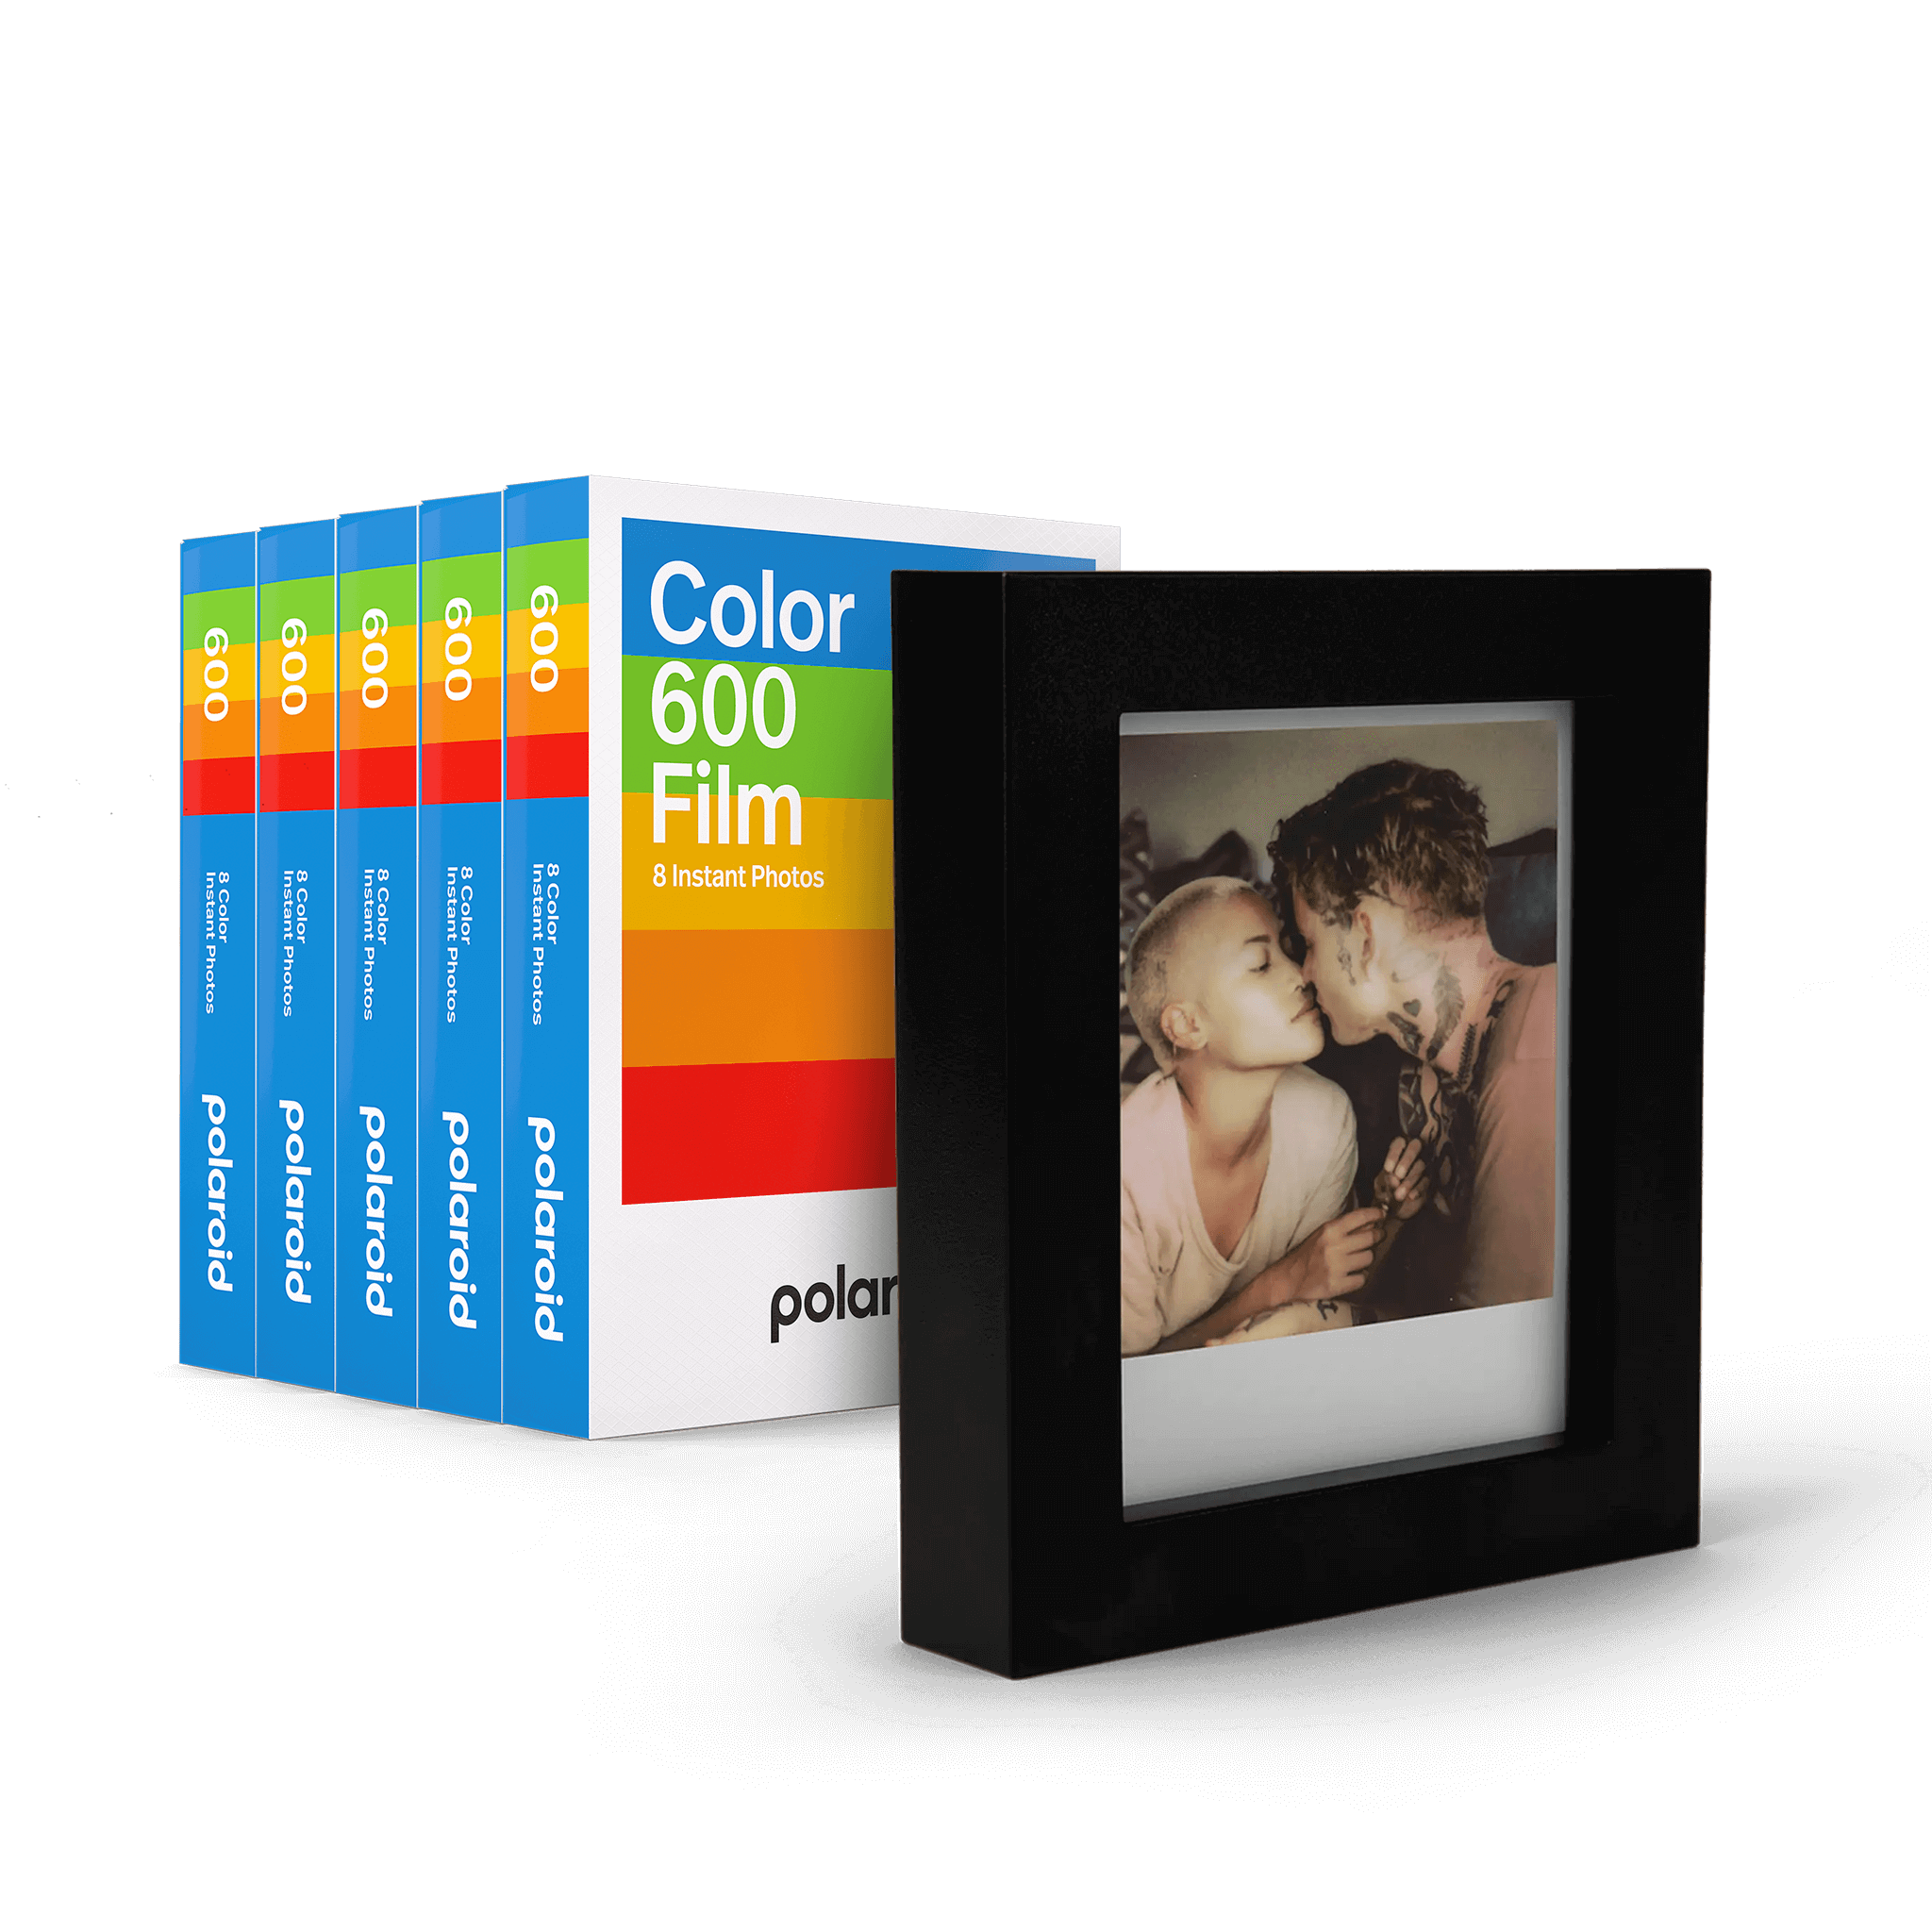 Polaroid Originals - Triple Pack Color Film for 600 - Metallic Red Frame -  Film for Polaroid Originals 600 Cameras - OneStep 2 - Avvenice